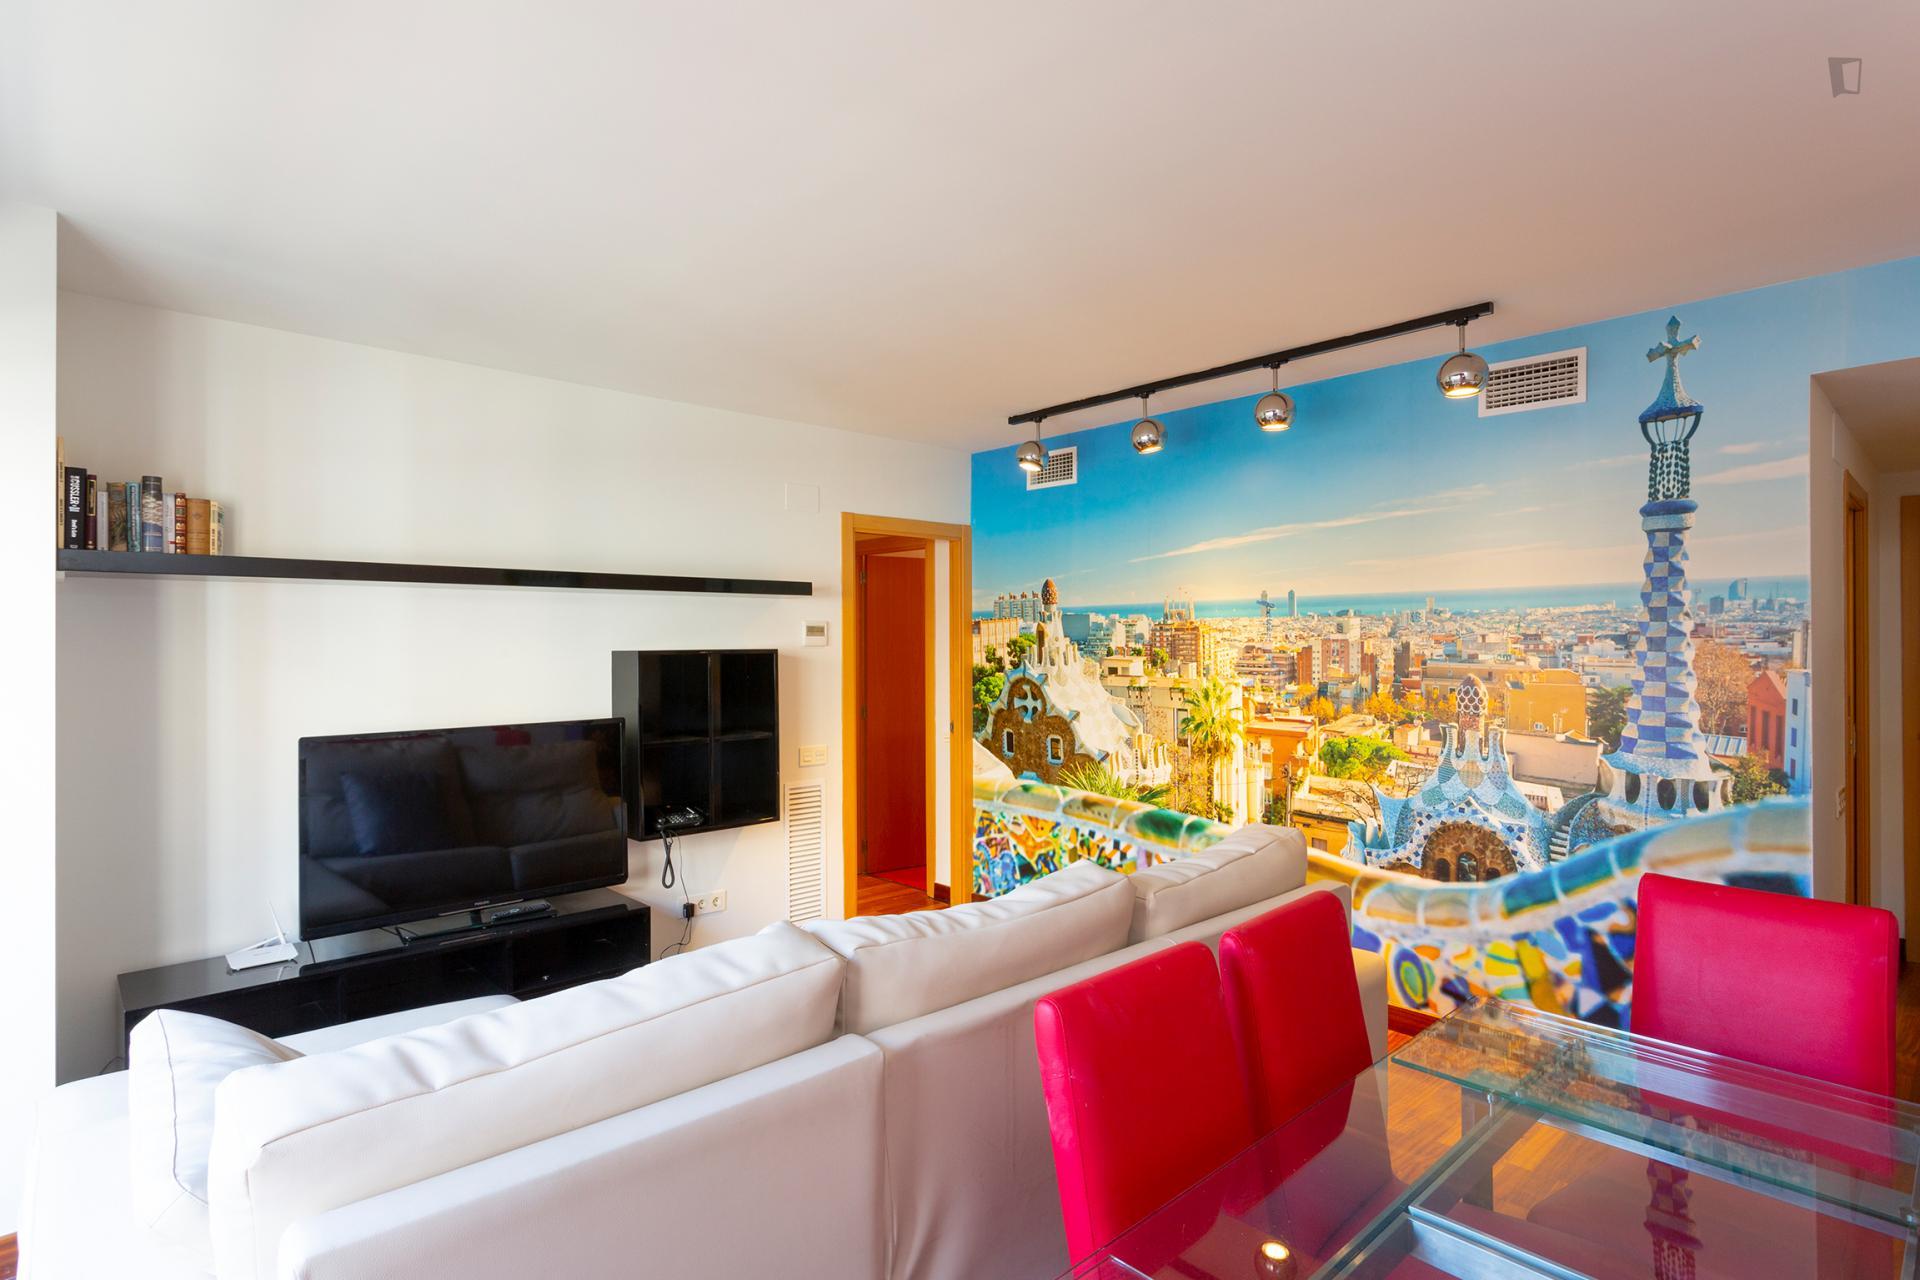 Telegraf - Modern furnished flat in Barcelona